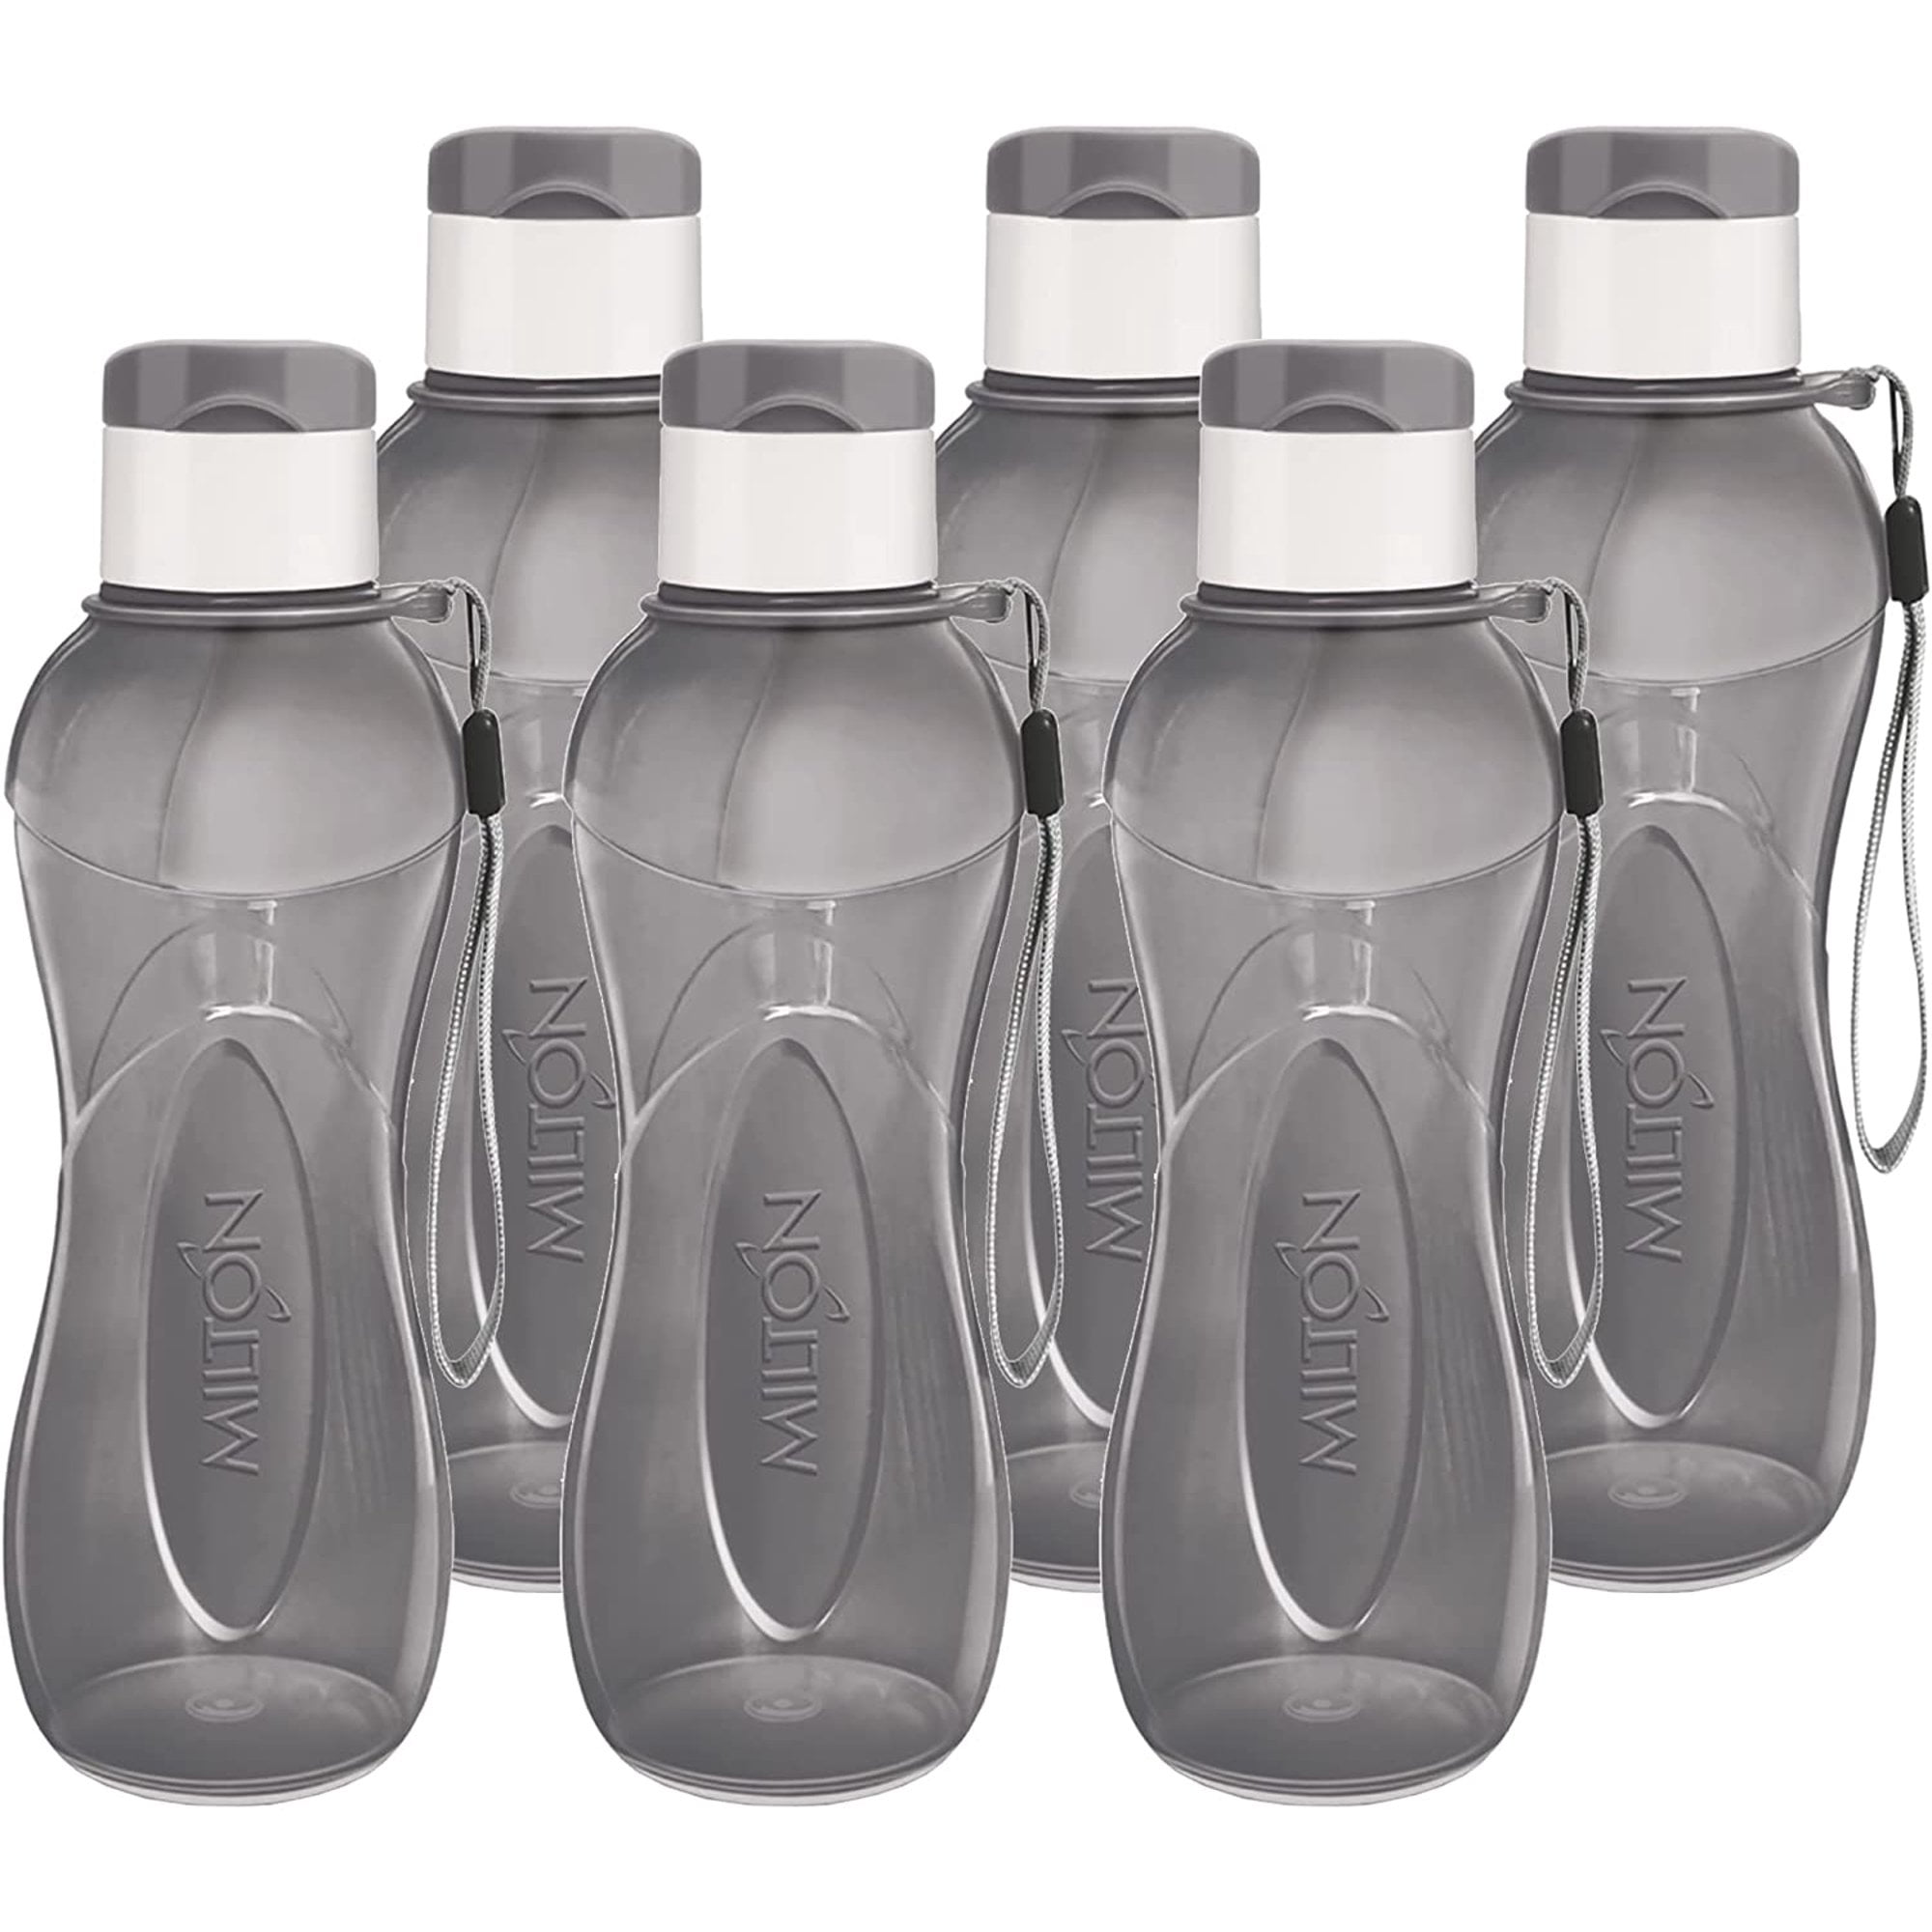 Milton 6-Pc Reusable Water Bottles Bulk Pack 12 oz Plastic Bottles with Caps, Pink, Size: 12oz